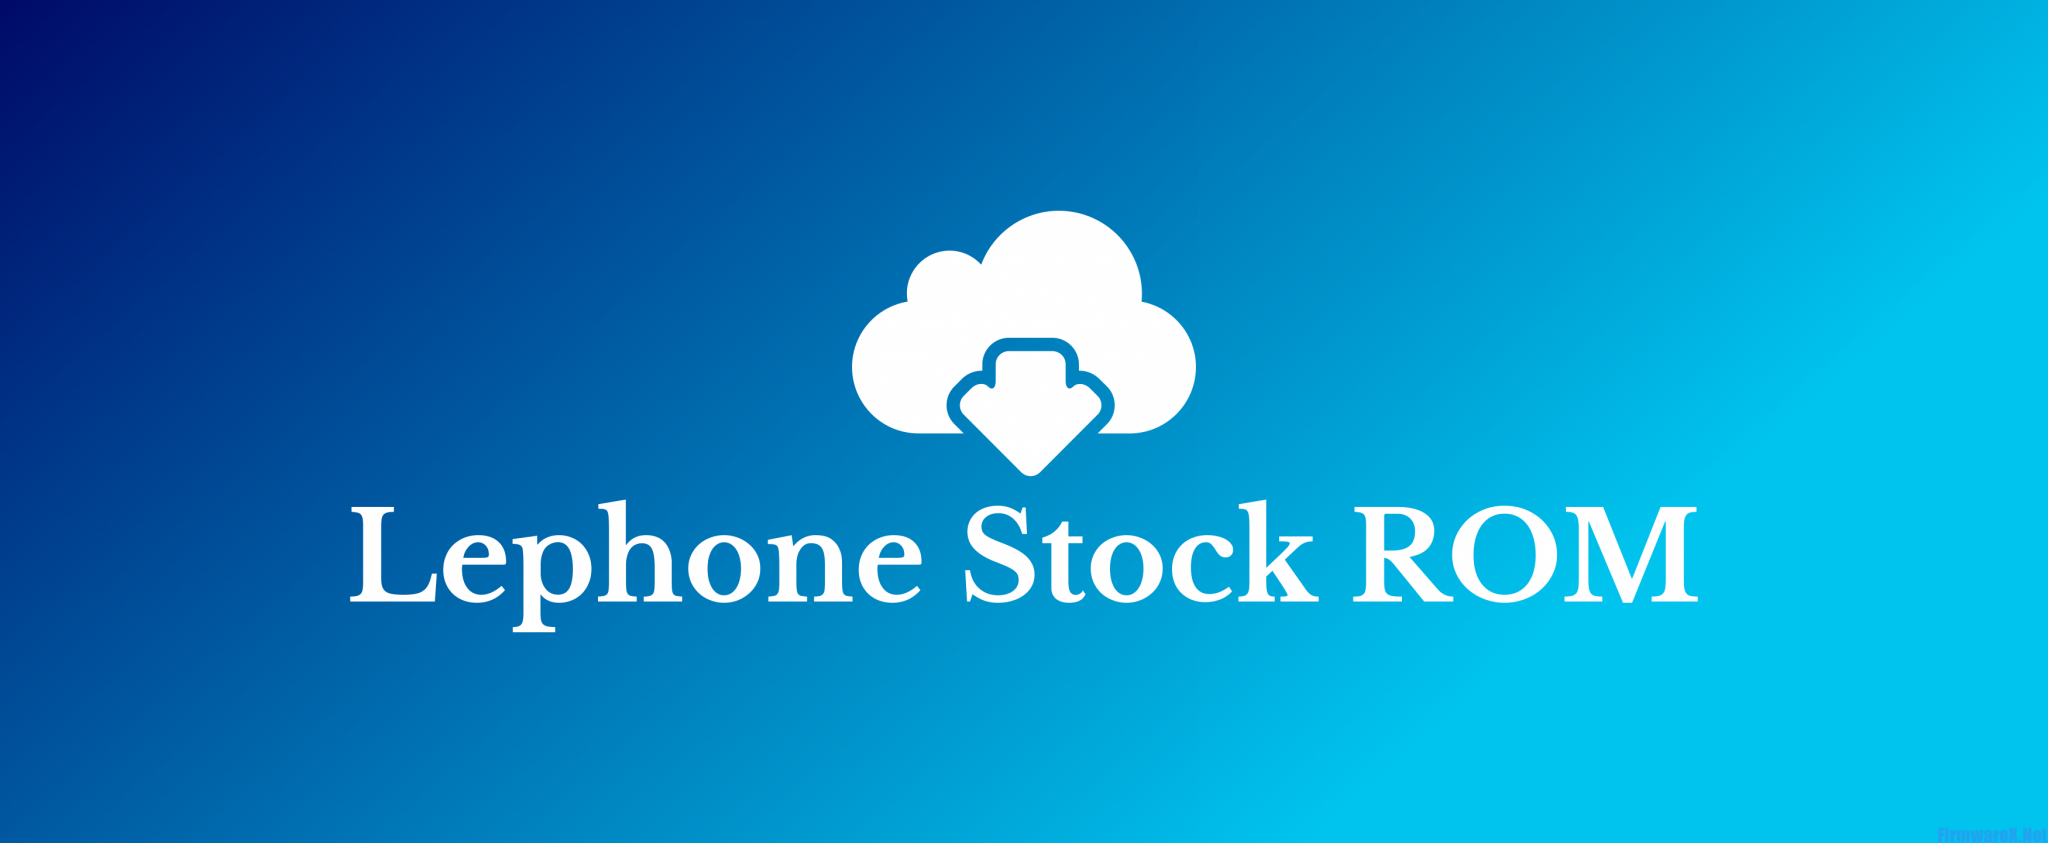 Lephone Stock ROM